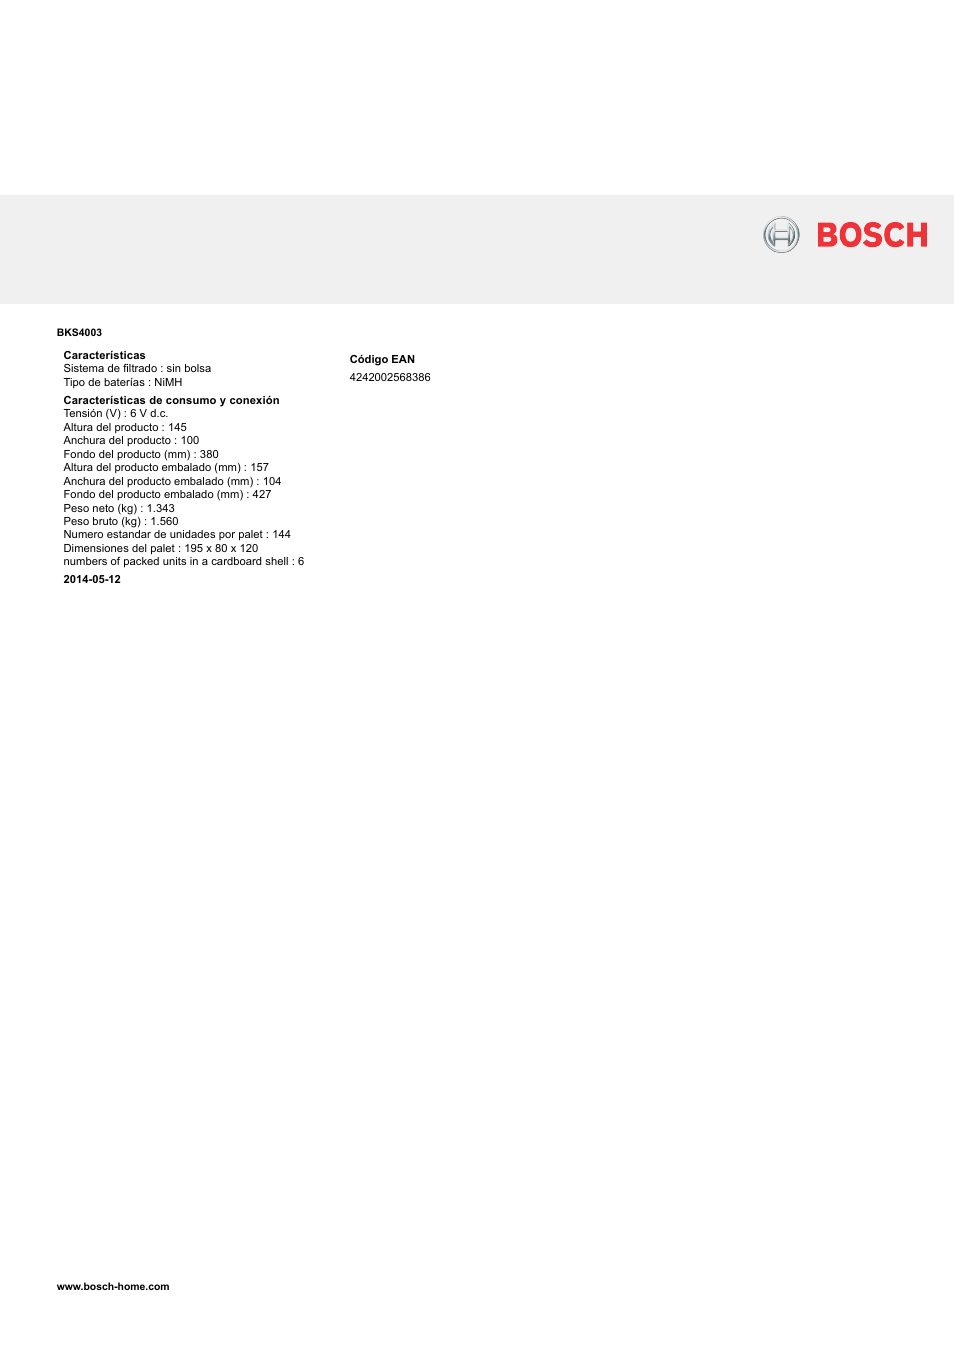 Bosch BKS4003 6V EAN 4242002568386 User Manual | Page 2 / 2